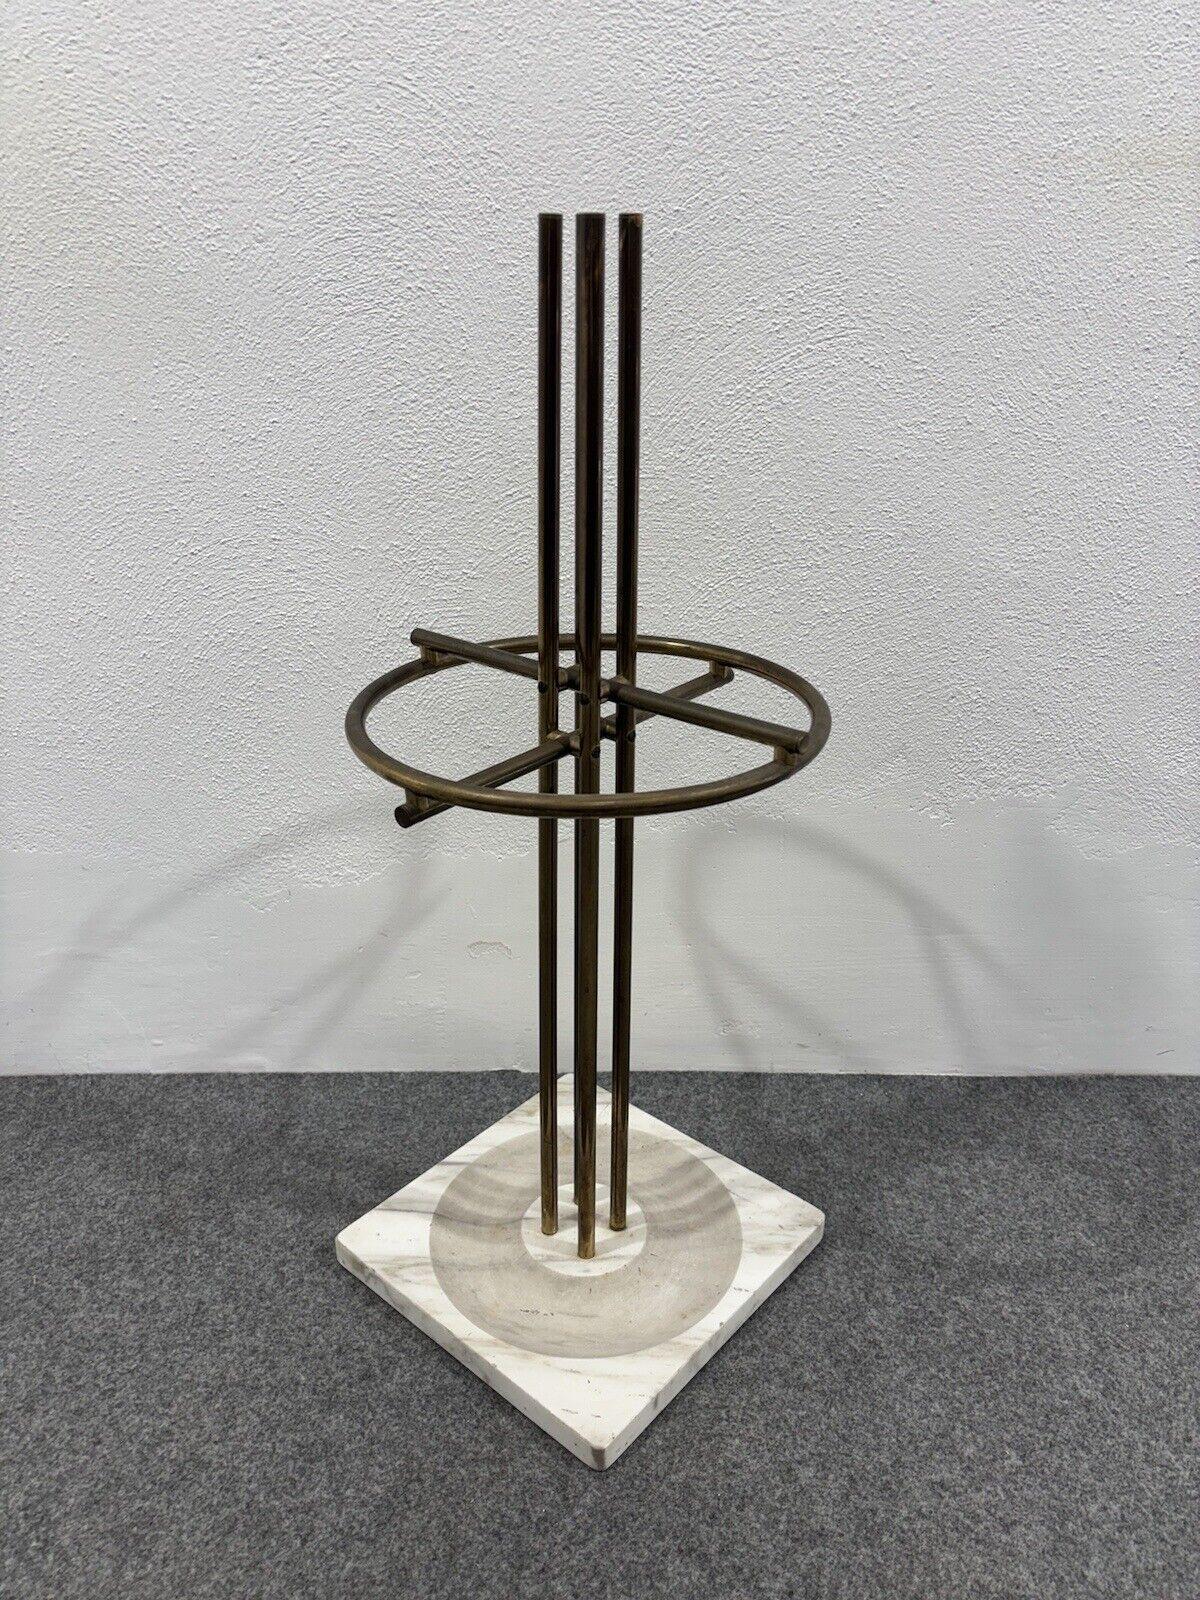 Italian Renato Zevi Metalarte Umbrella Stand Marble And Brass Design Modernism For Sale